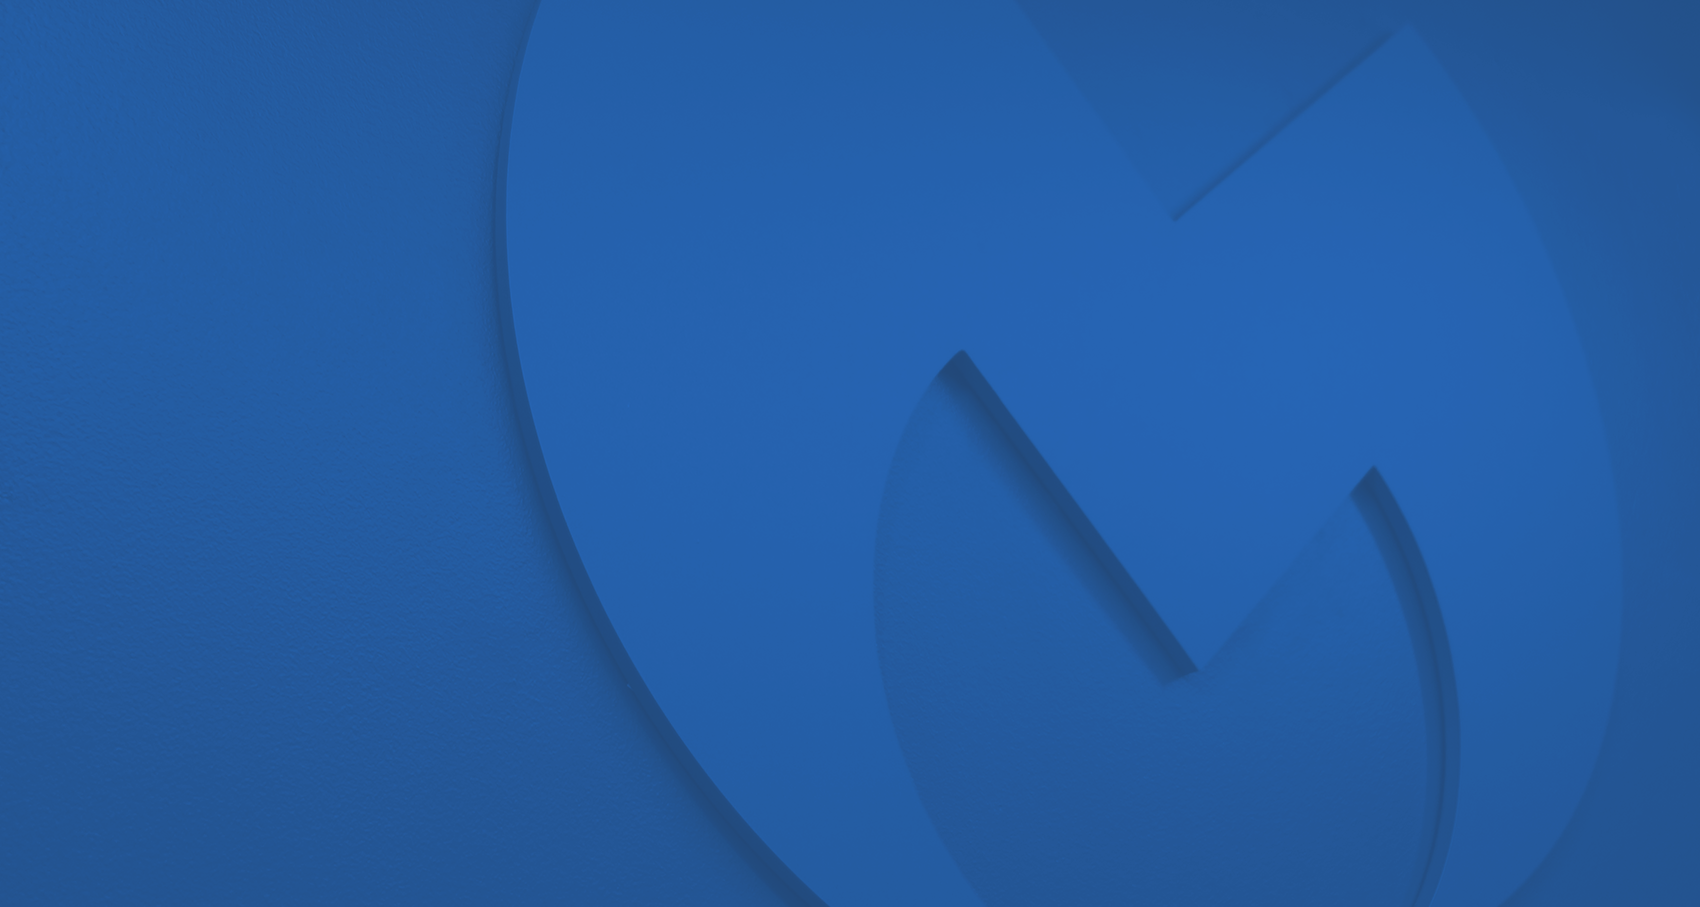 Malwarebytes logo on a blue background